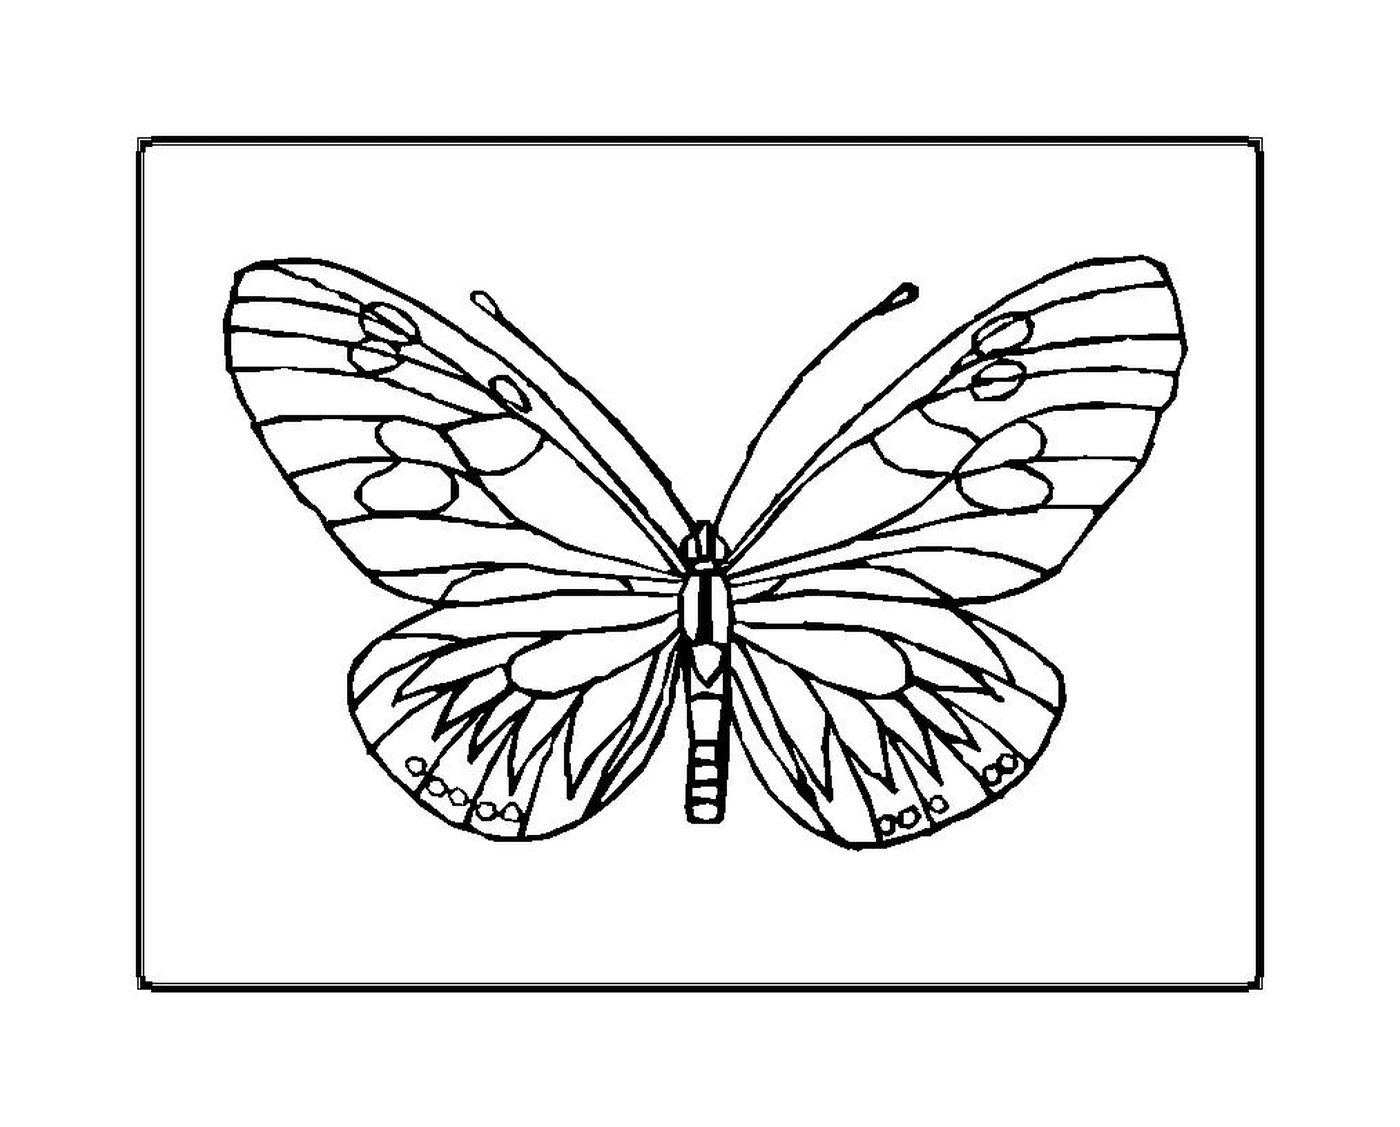  farfalla delicata e fragile 